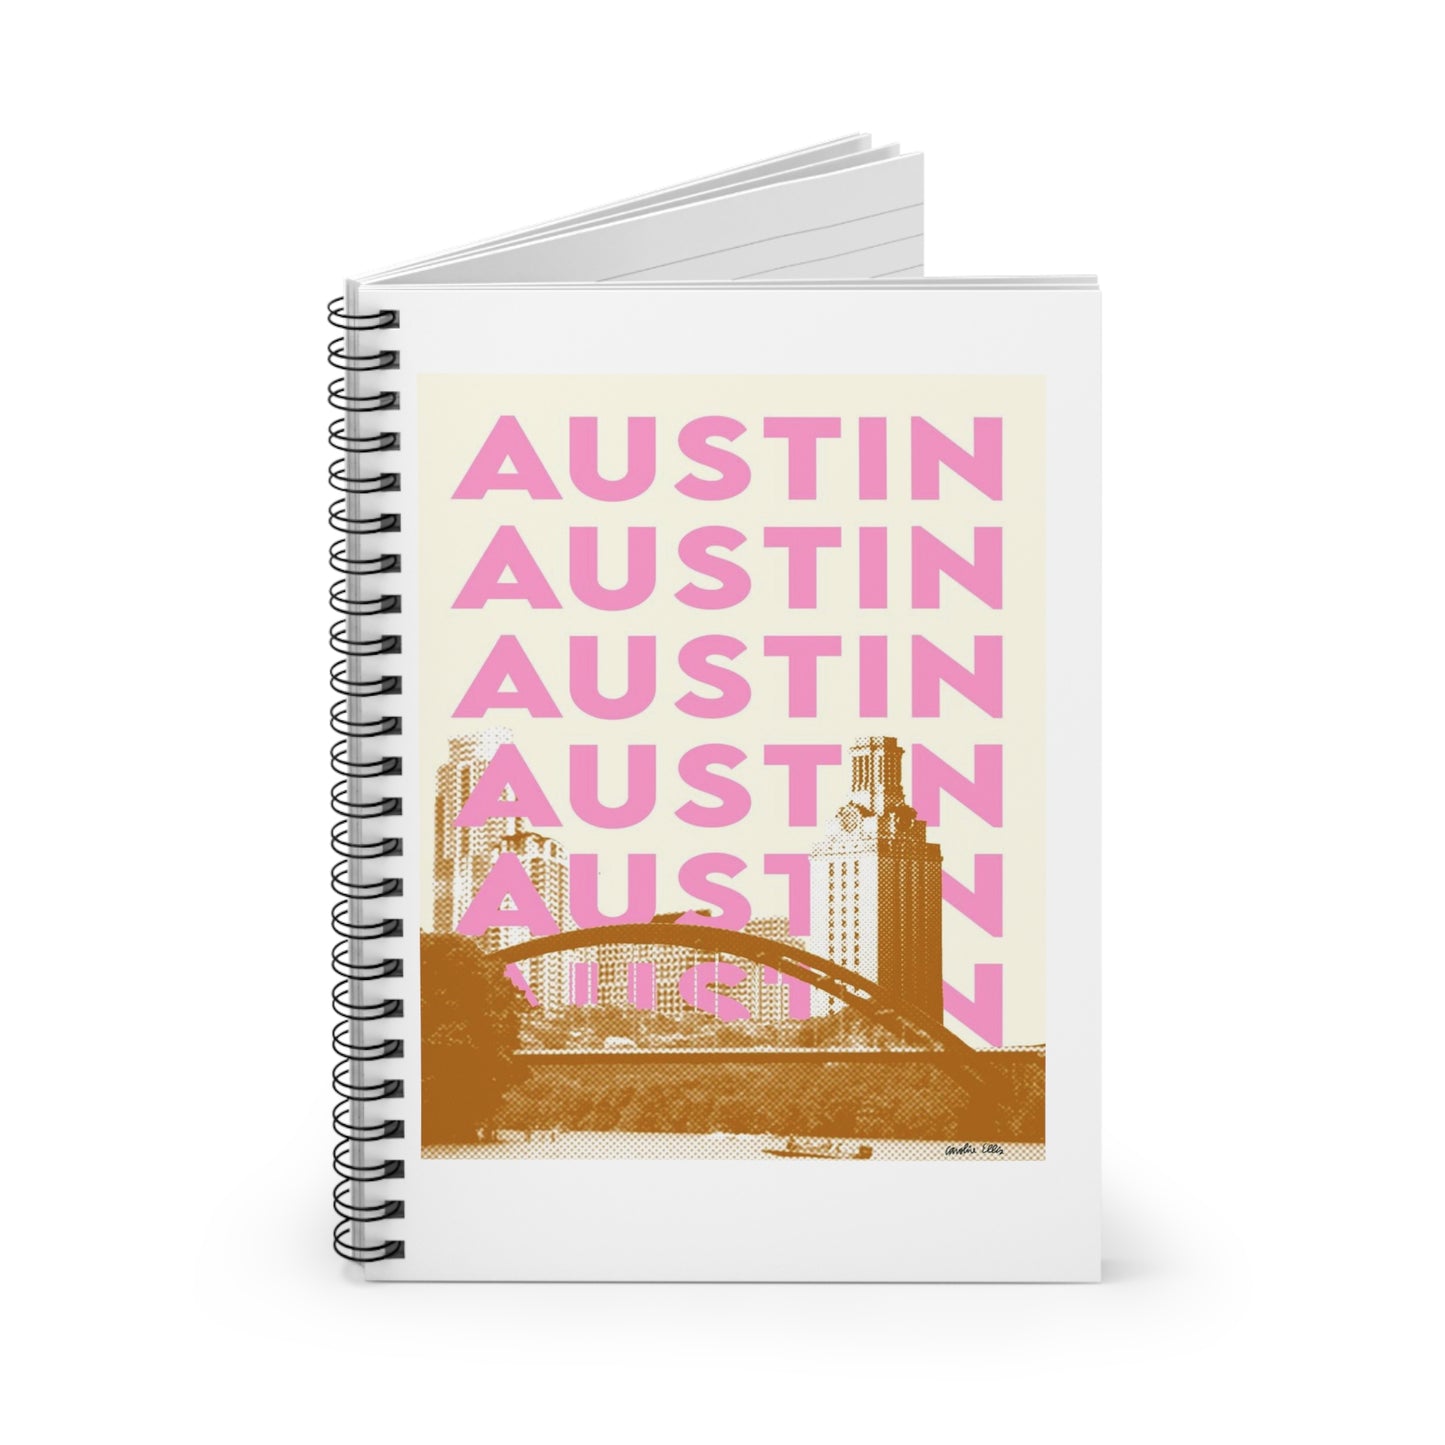 "AUSTIN" Spiral Notebook - Ruled Line